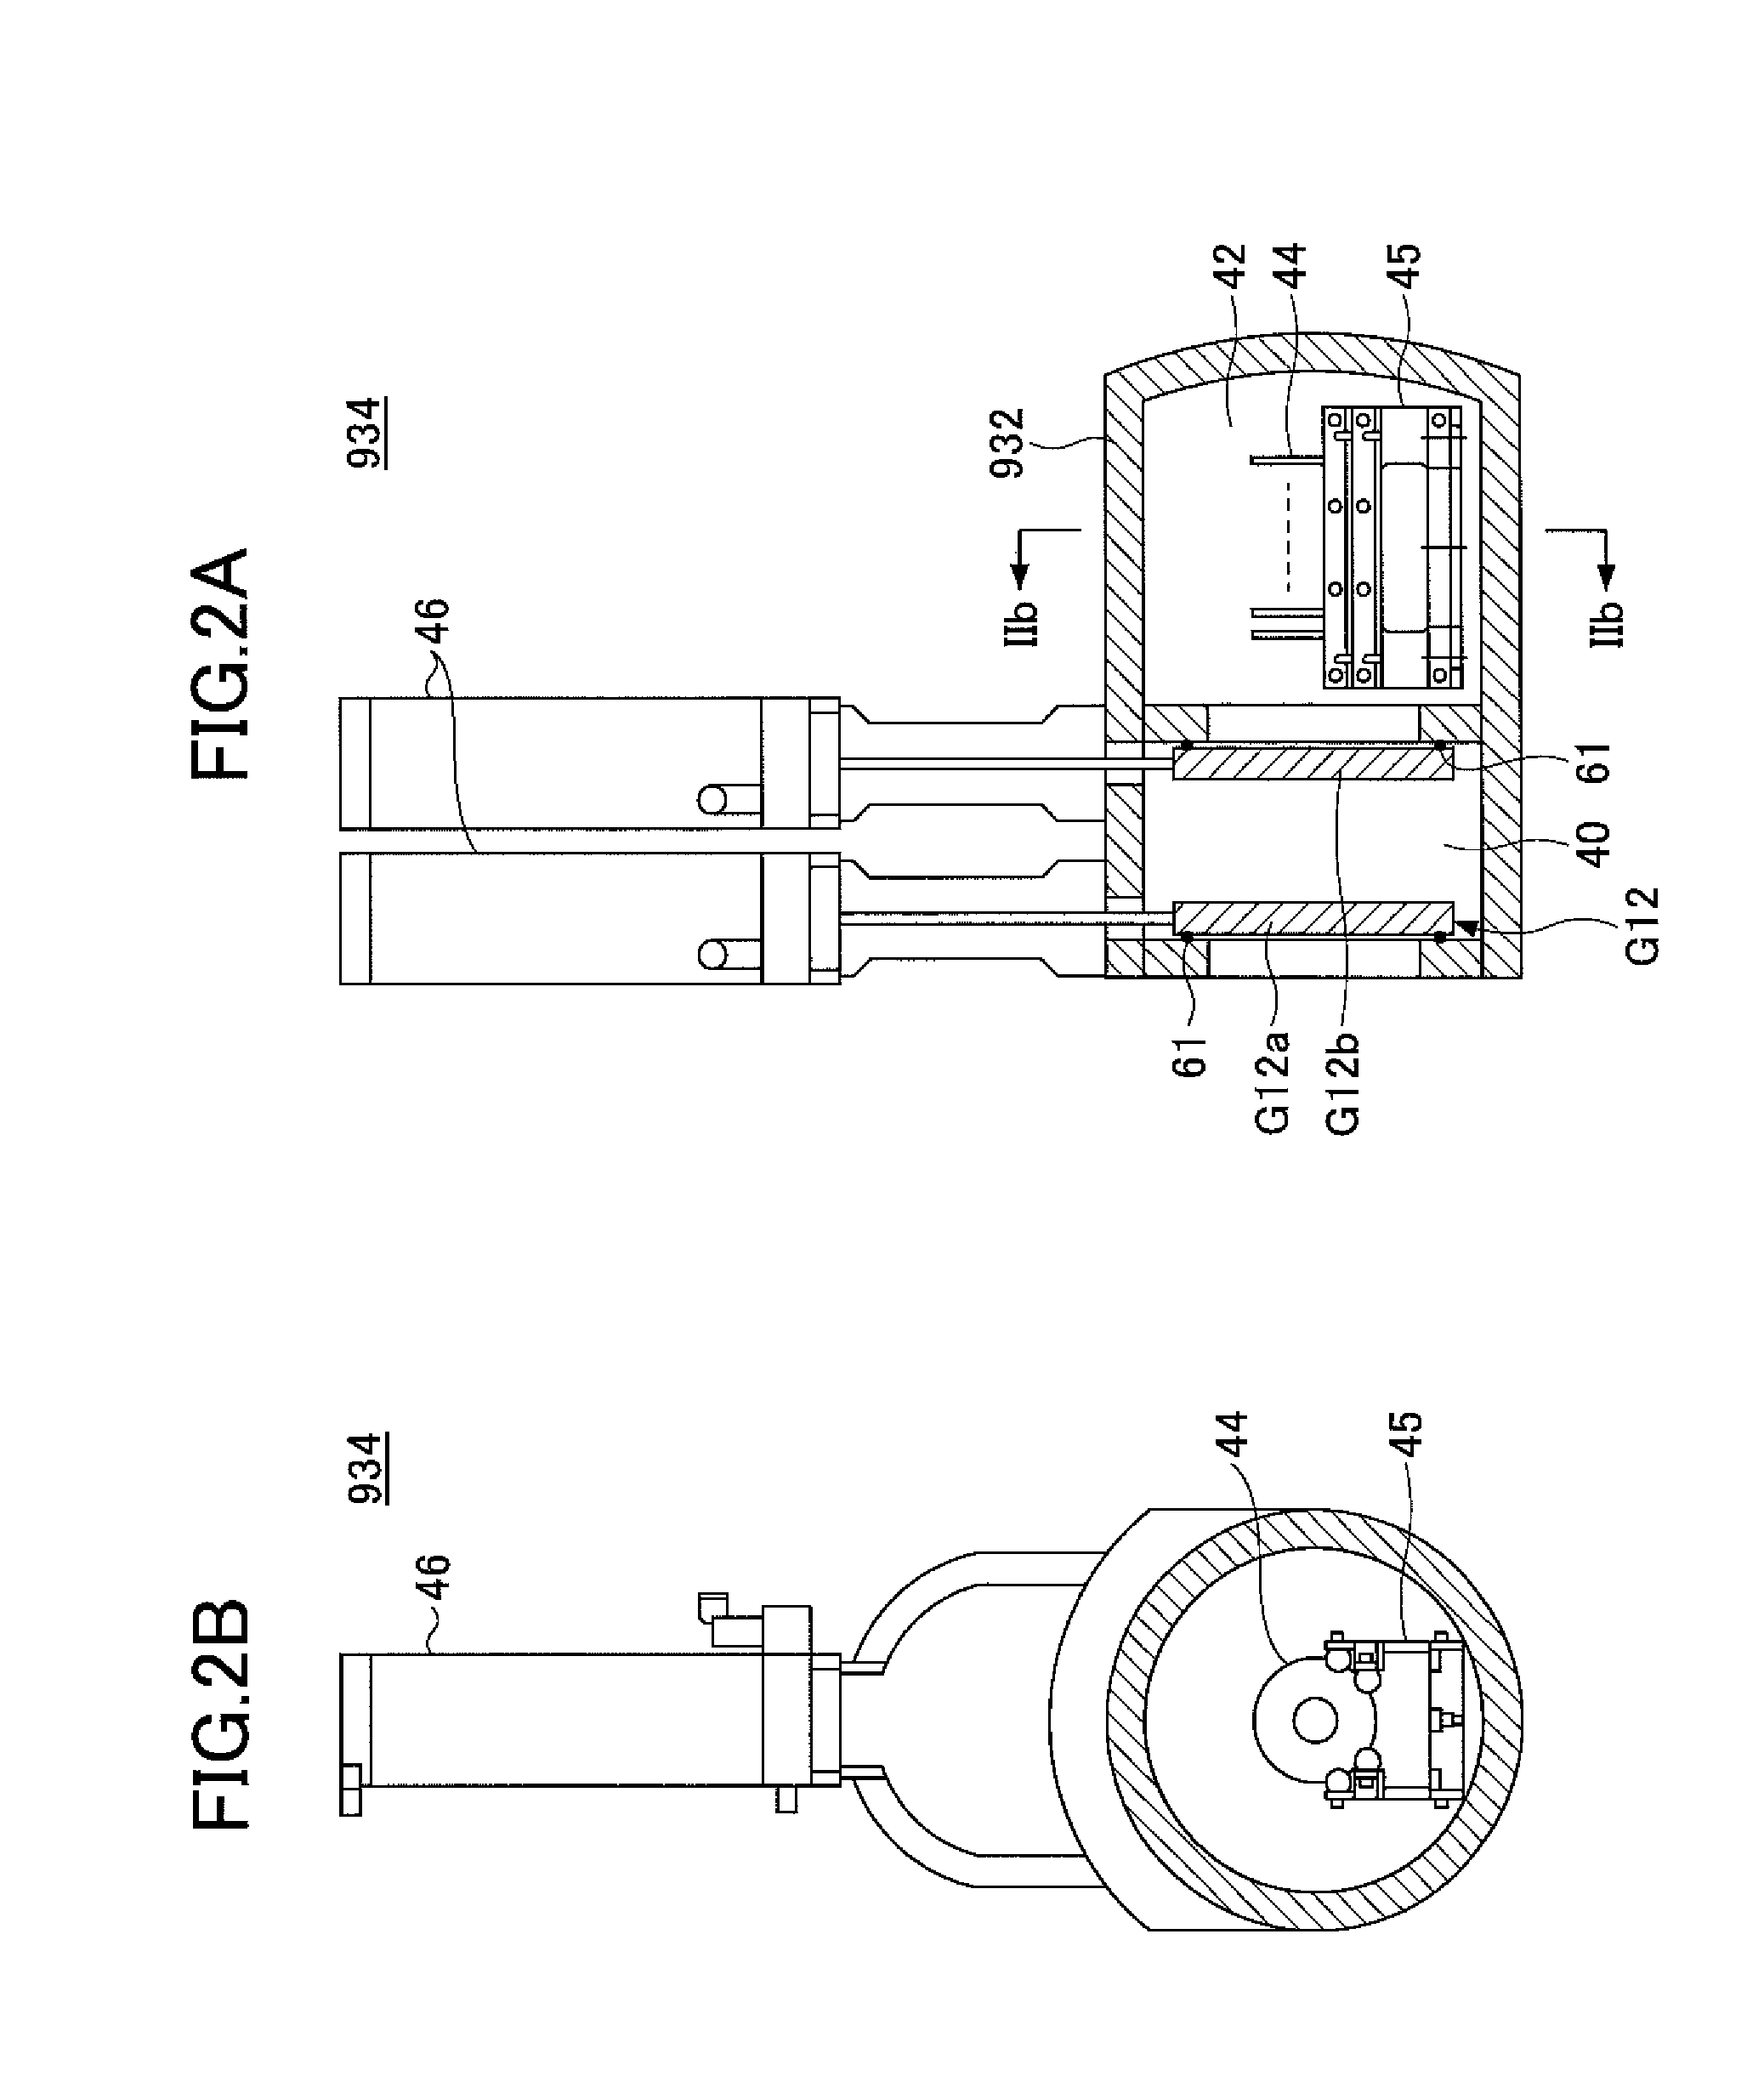 Magnetic recording medium fabrication method and apparatus